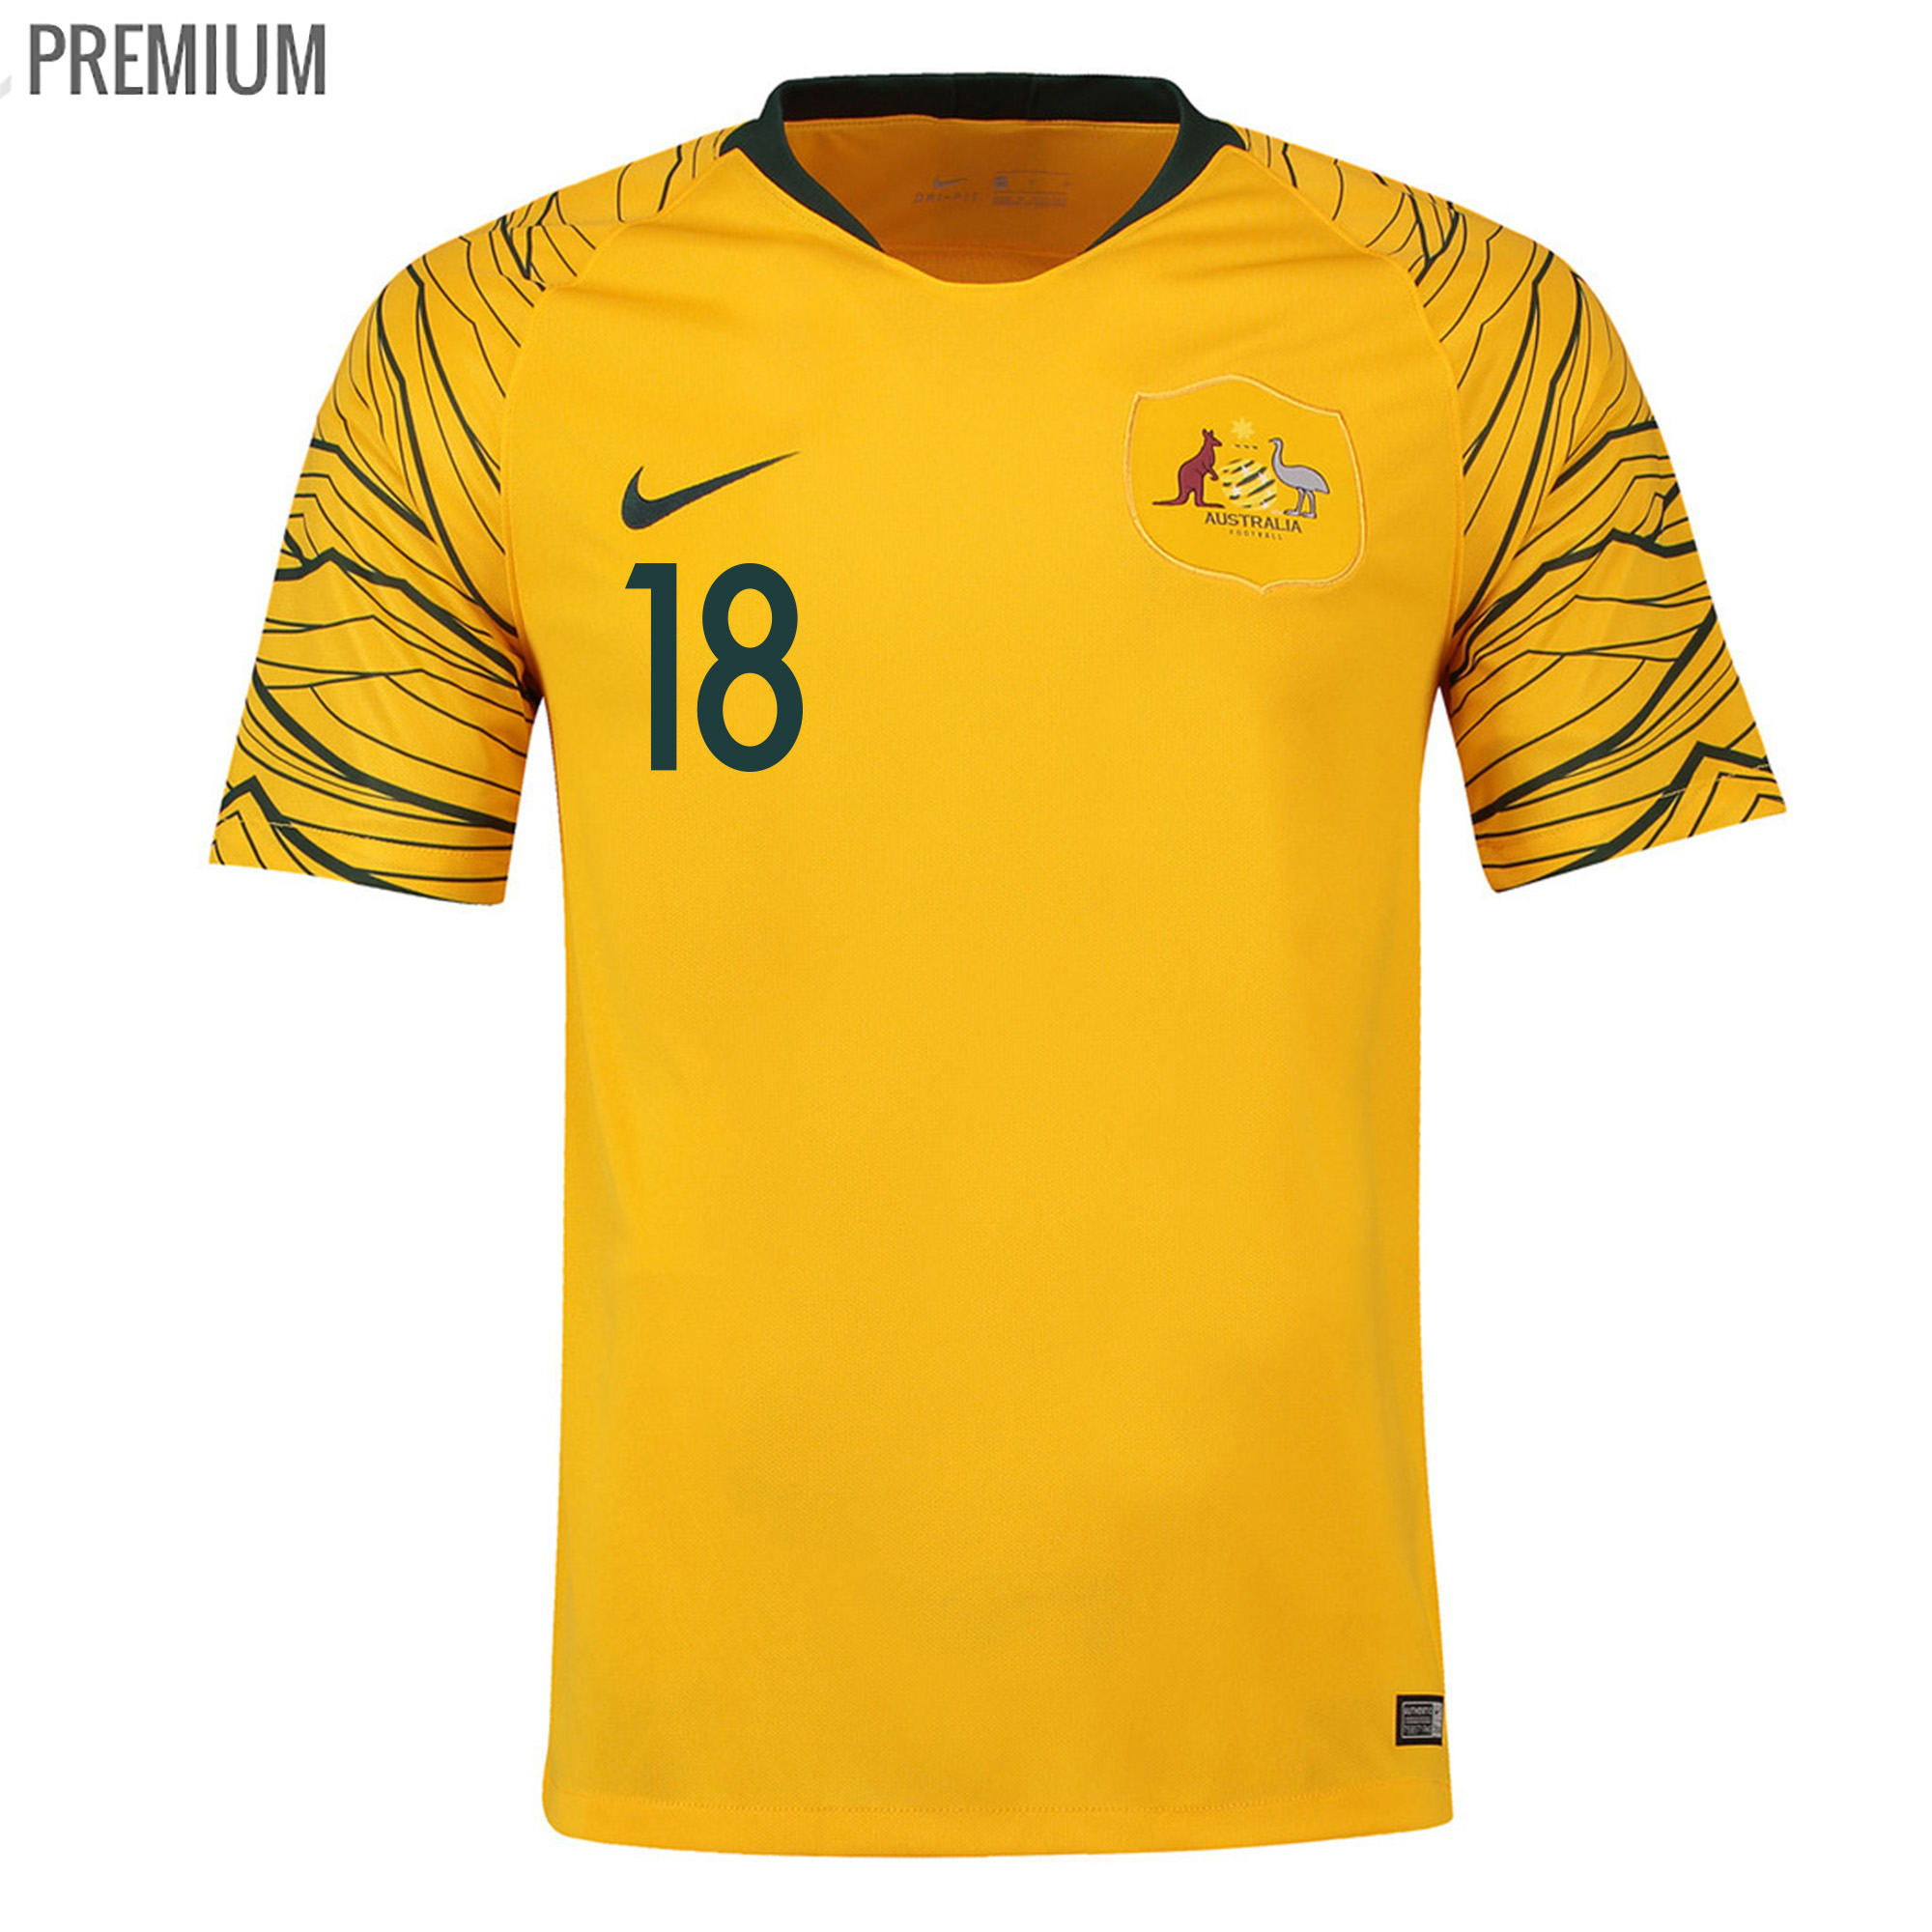 australia women's soccer jersey